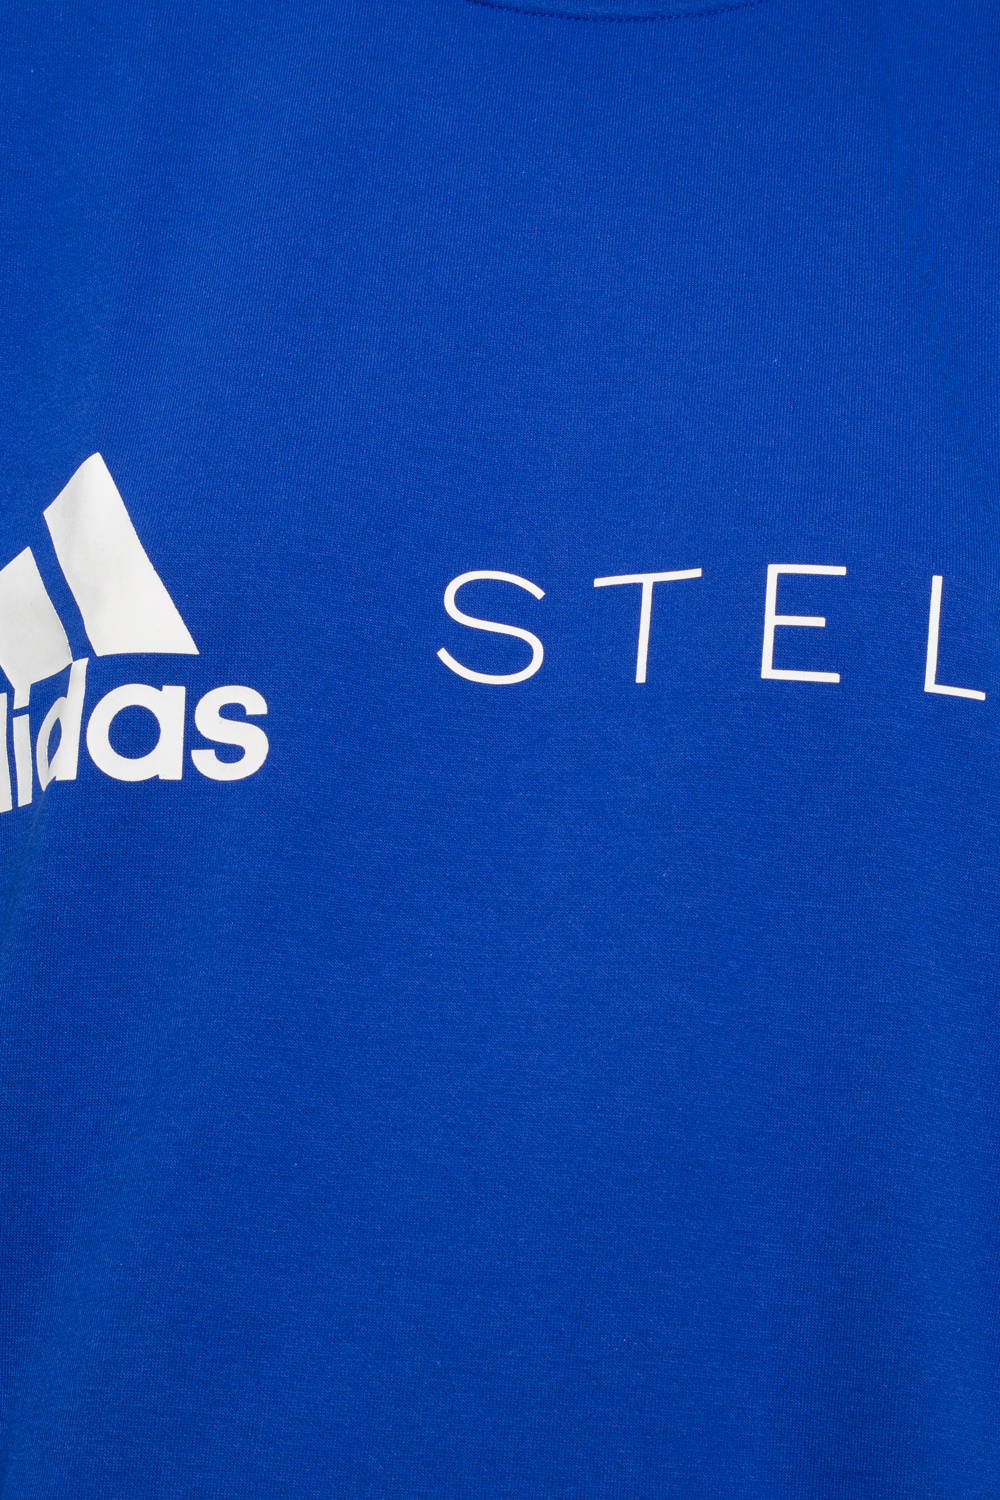 T - praktikum adidas jersey for women - shirt with logo by Stella McCartney GB